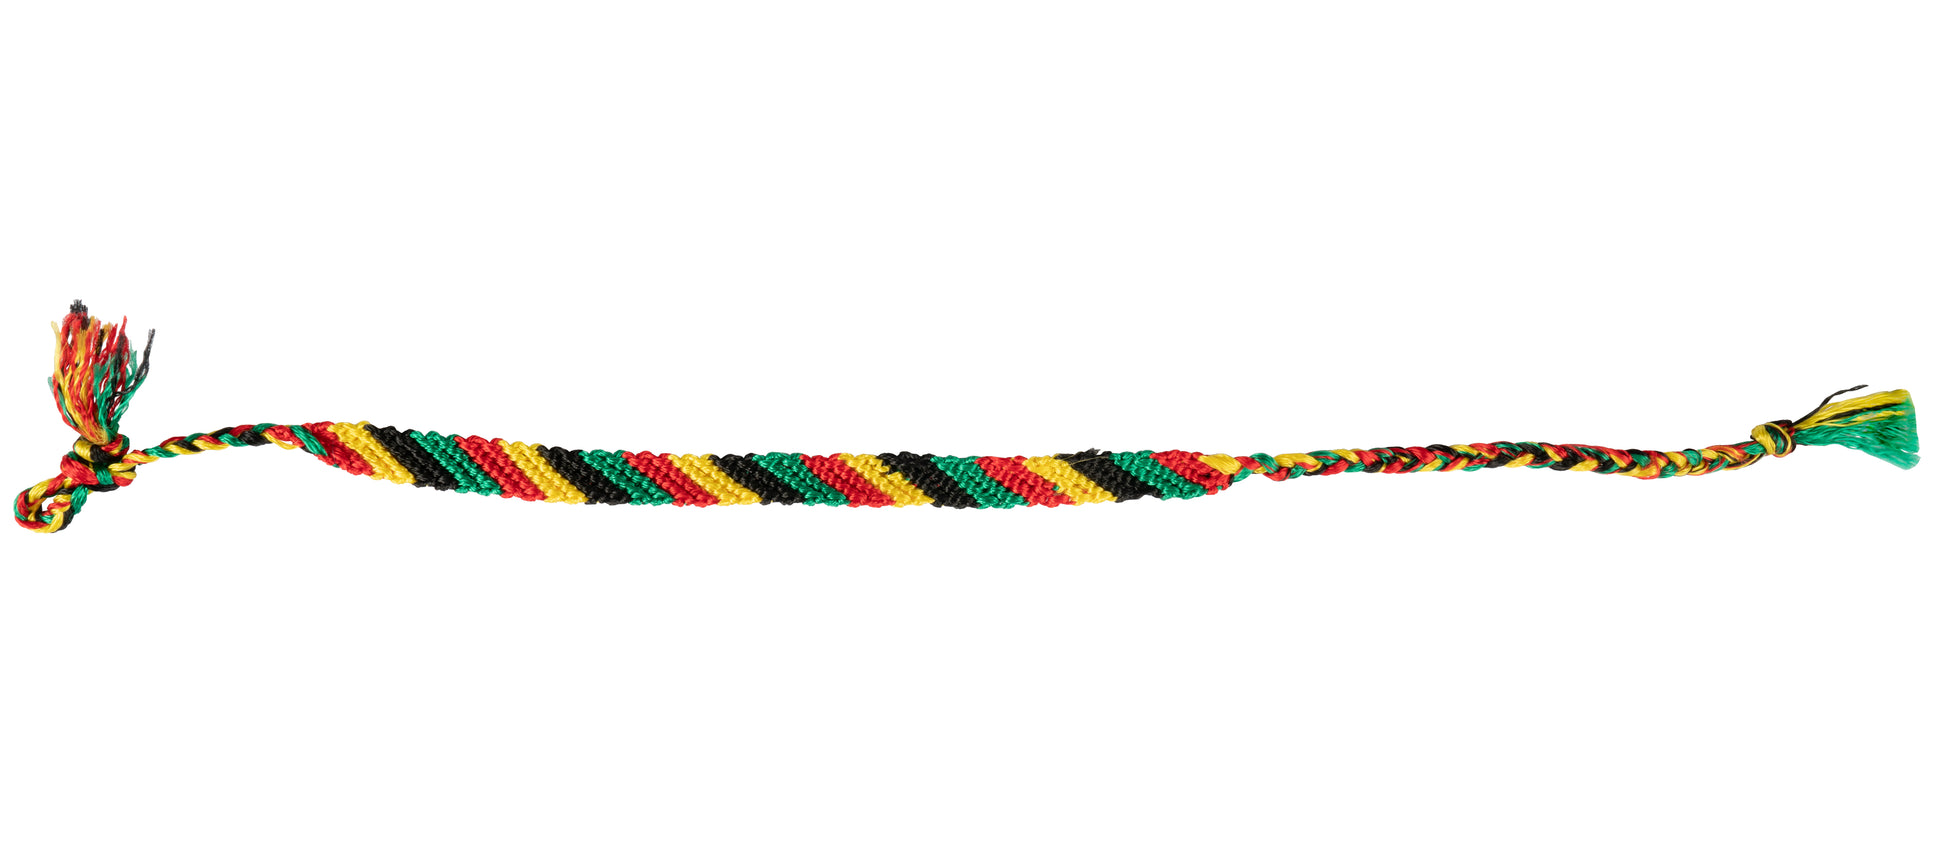 Handmade Friendship Bracelets - Vibrant Fabric Bracelets for Celebrating Friendship - CCCollections